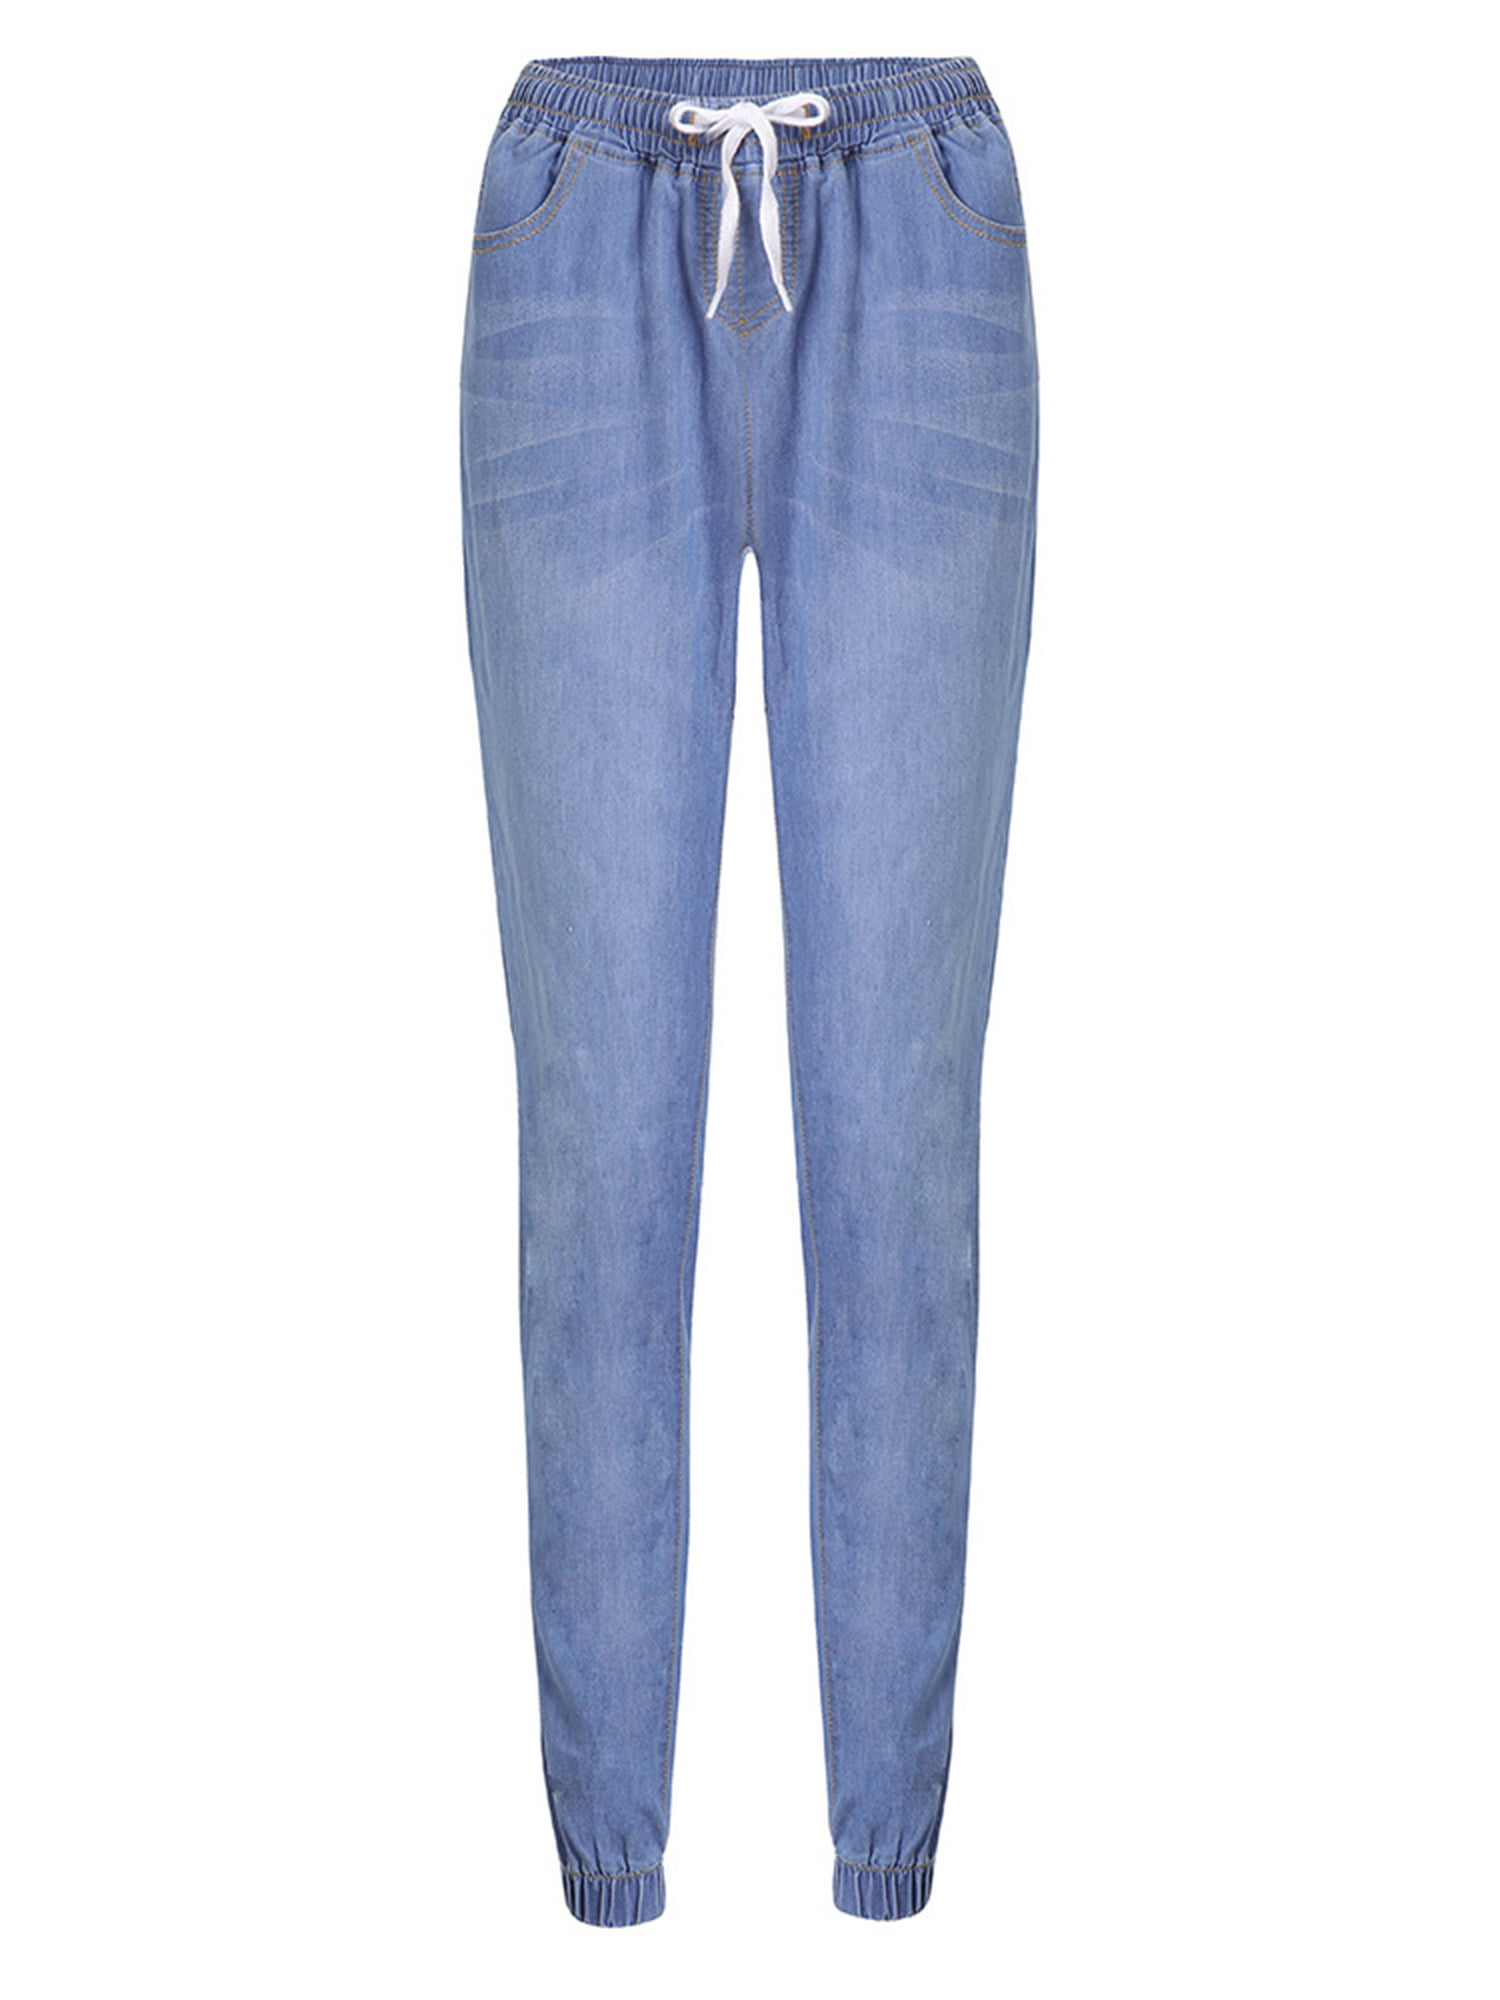 Women Blue Casual Plus size Slim Skinny Denim Jeans Pants Jeans Trousers S-6XL 